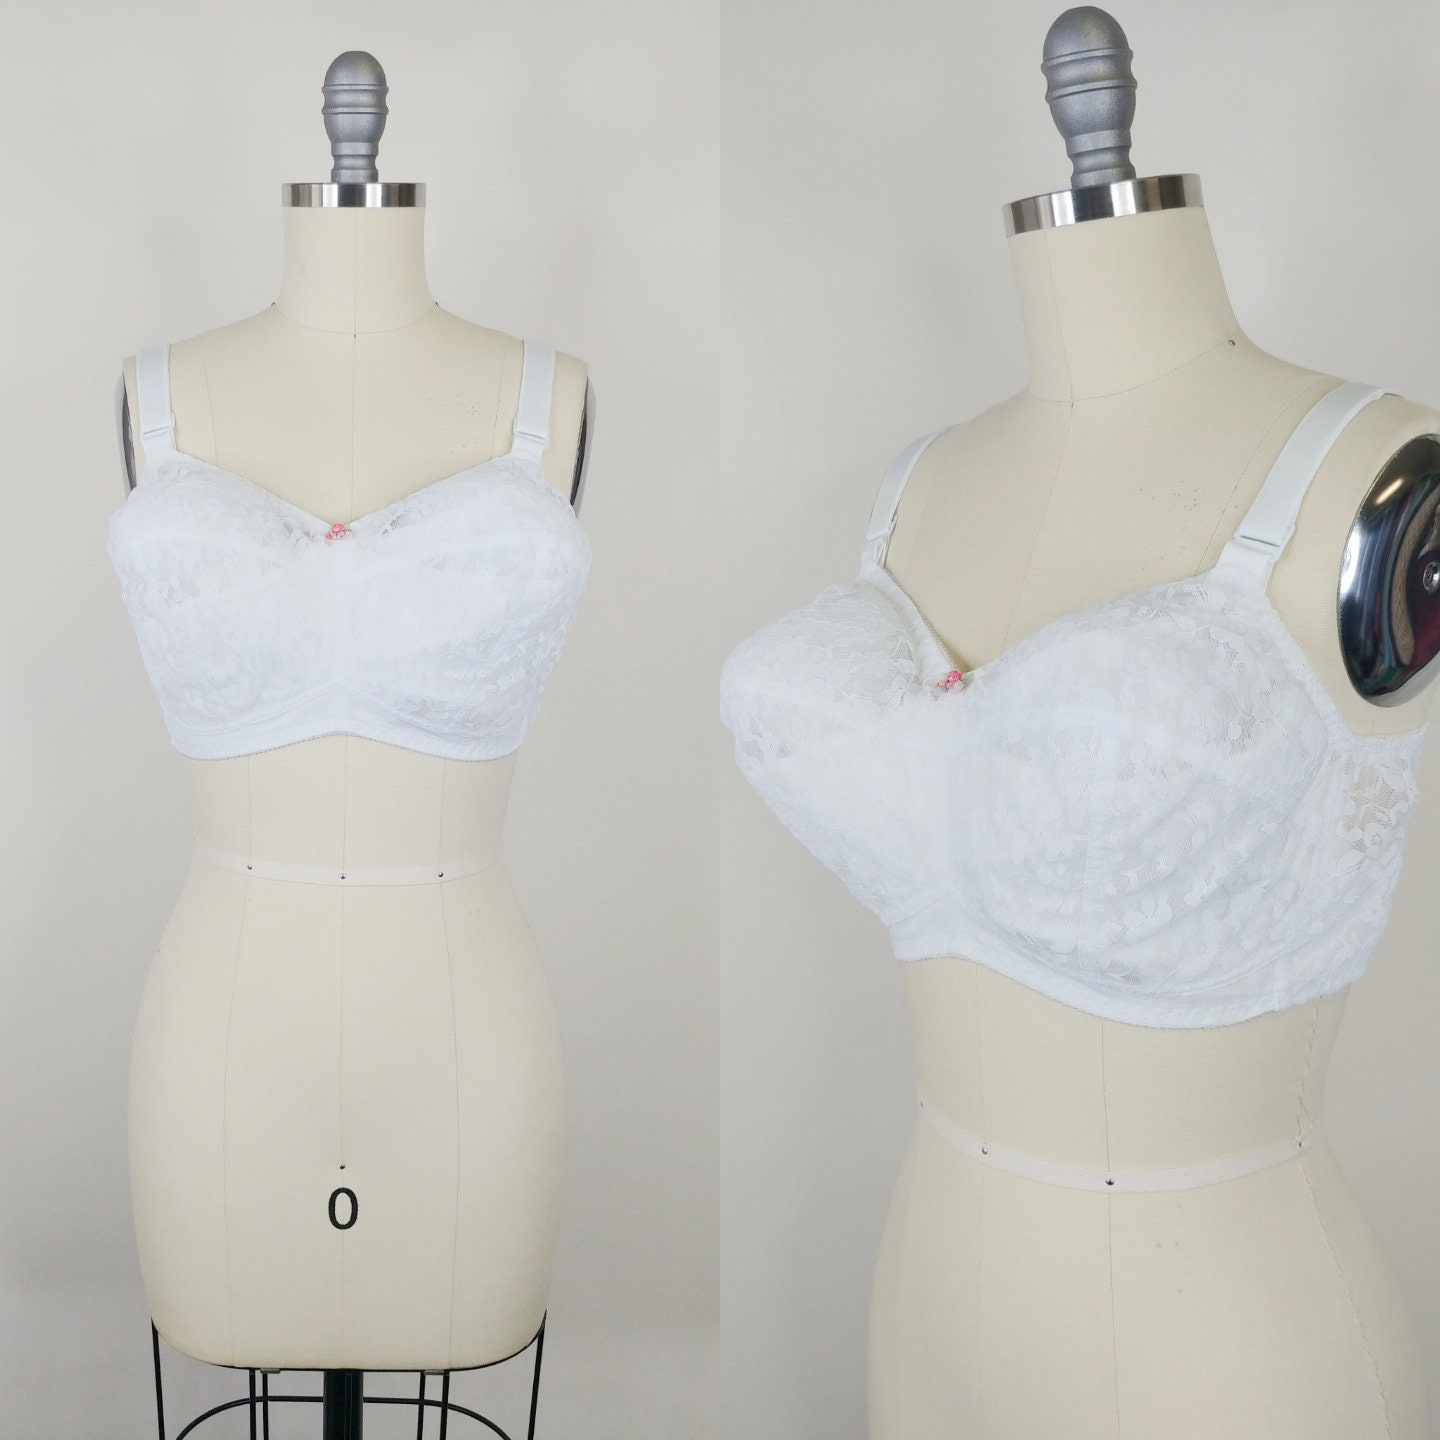 Vassarette lingerie print ad 1968 vintage 1960s retro art decor models bras